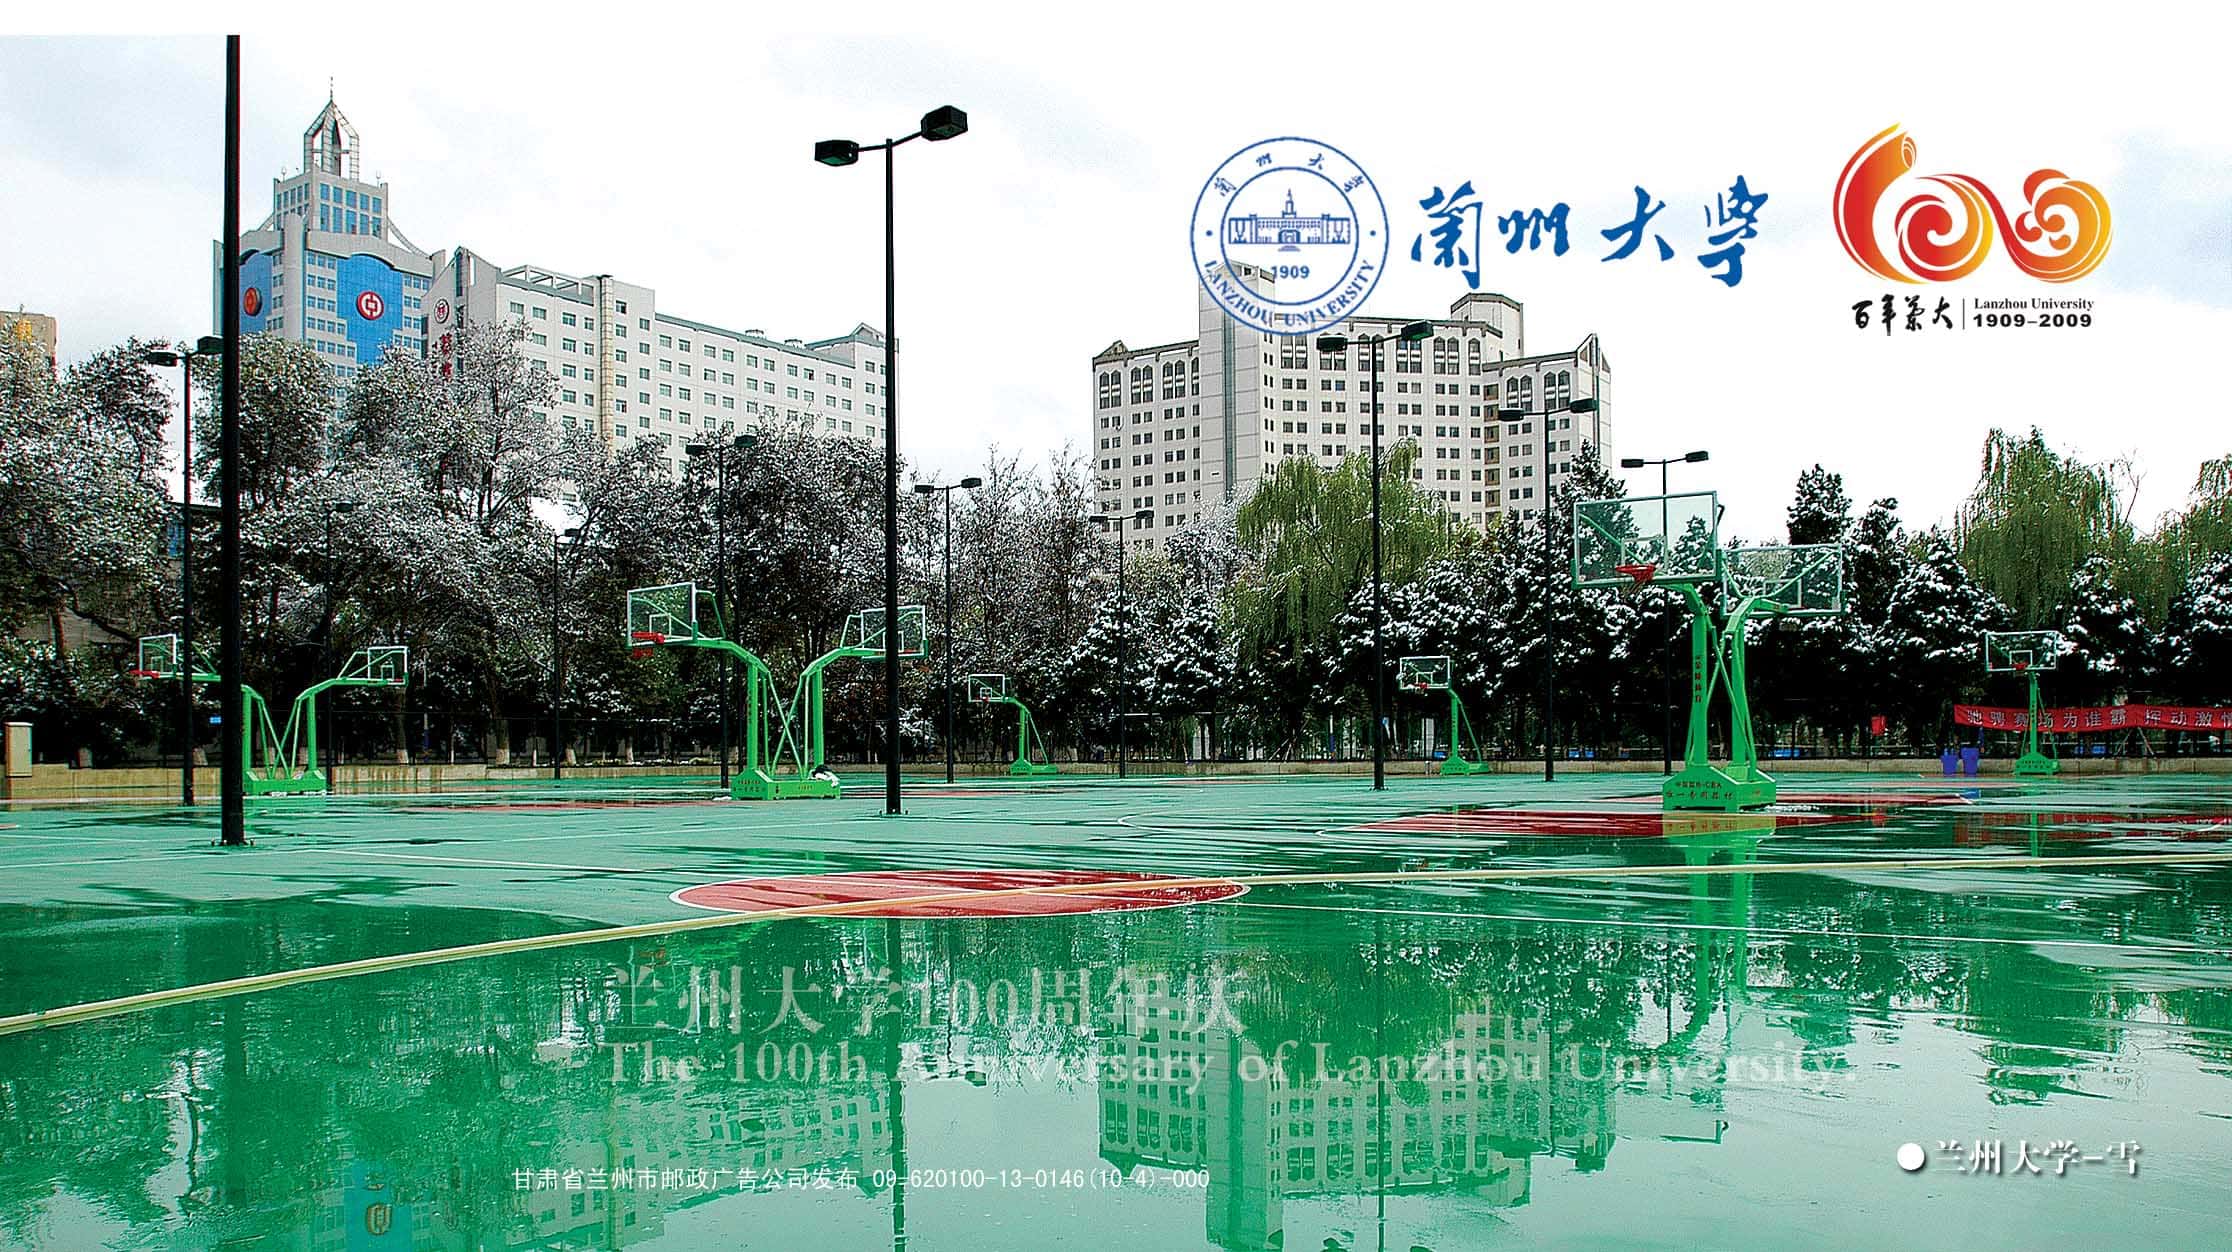 Lanzhou University Ranking | Lanzhou University Reviews | CUCAS China